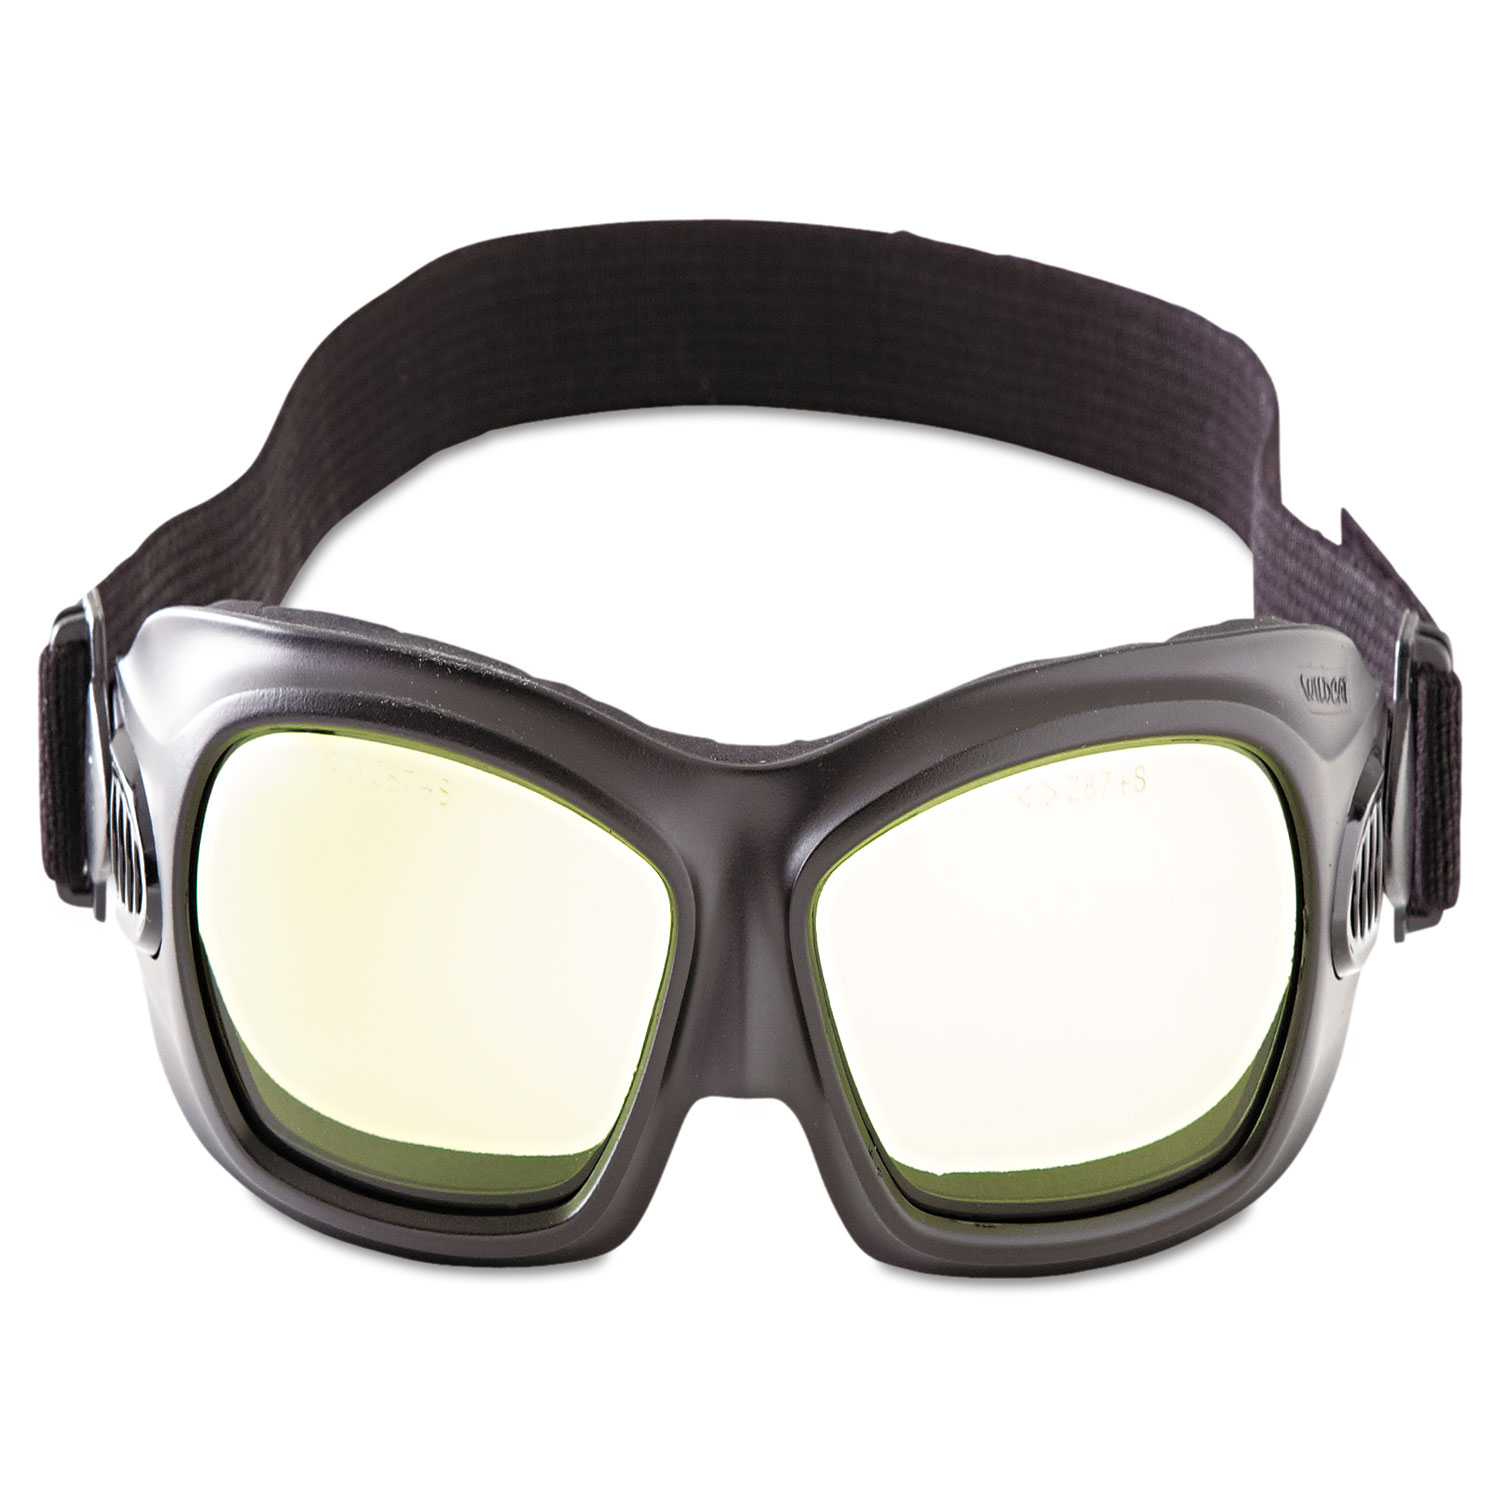 V80 WILDCAT Safety Goggles, Amber Anti-Fog Lens